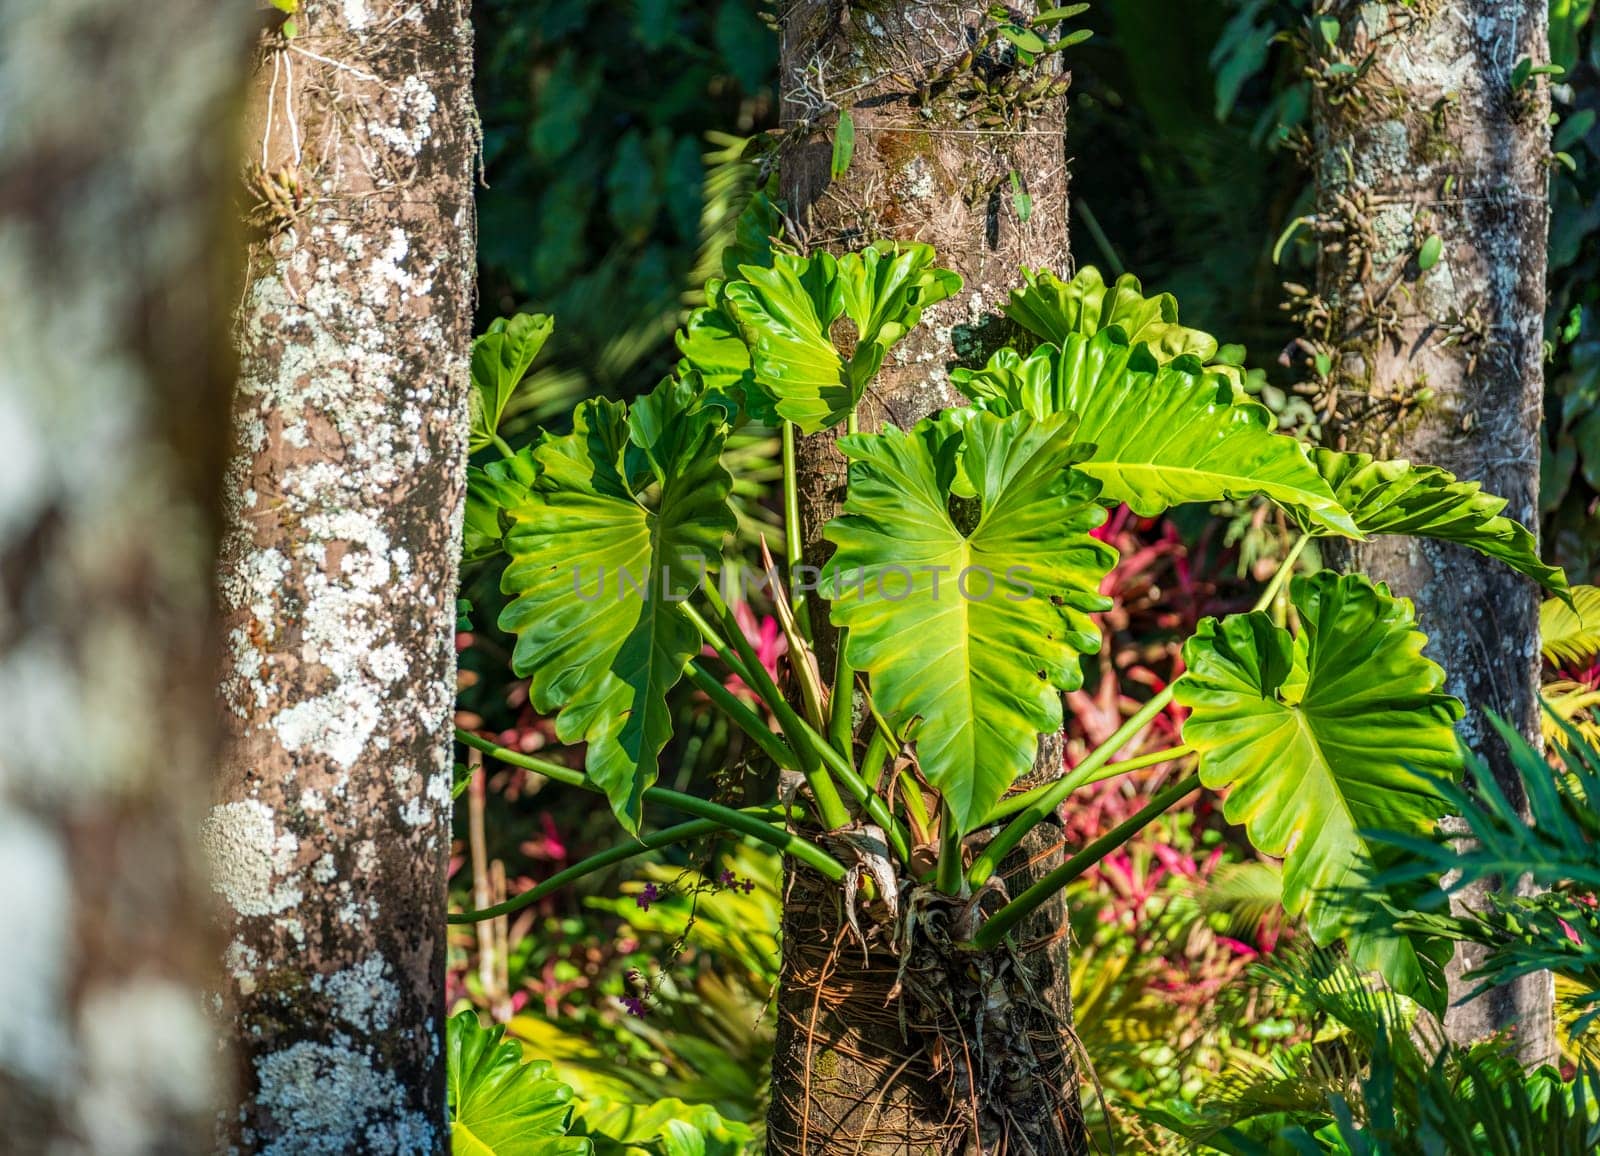 Vibrant tropical plants in a lush green rainforest setting by FerradalFCG